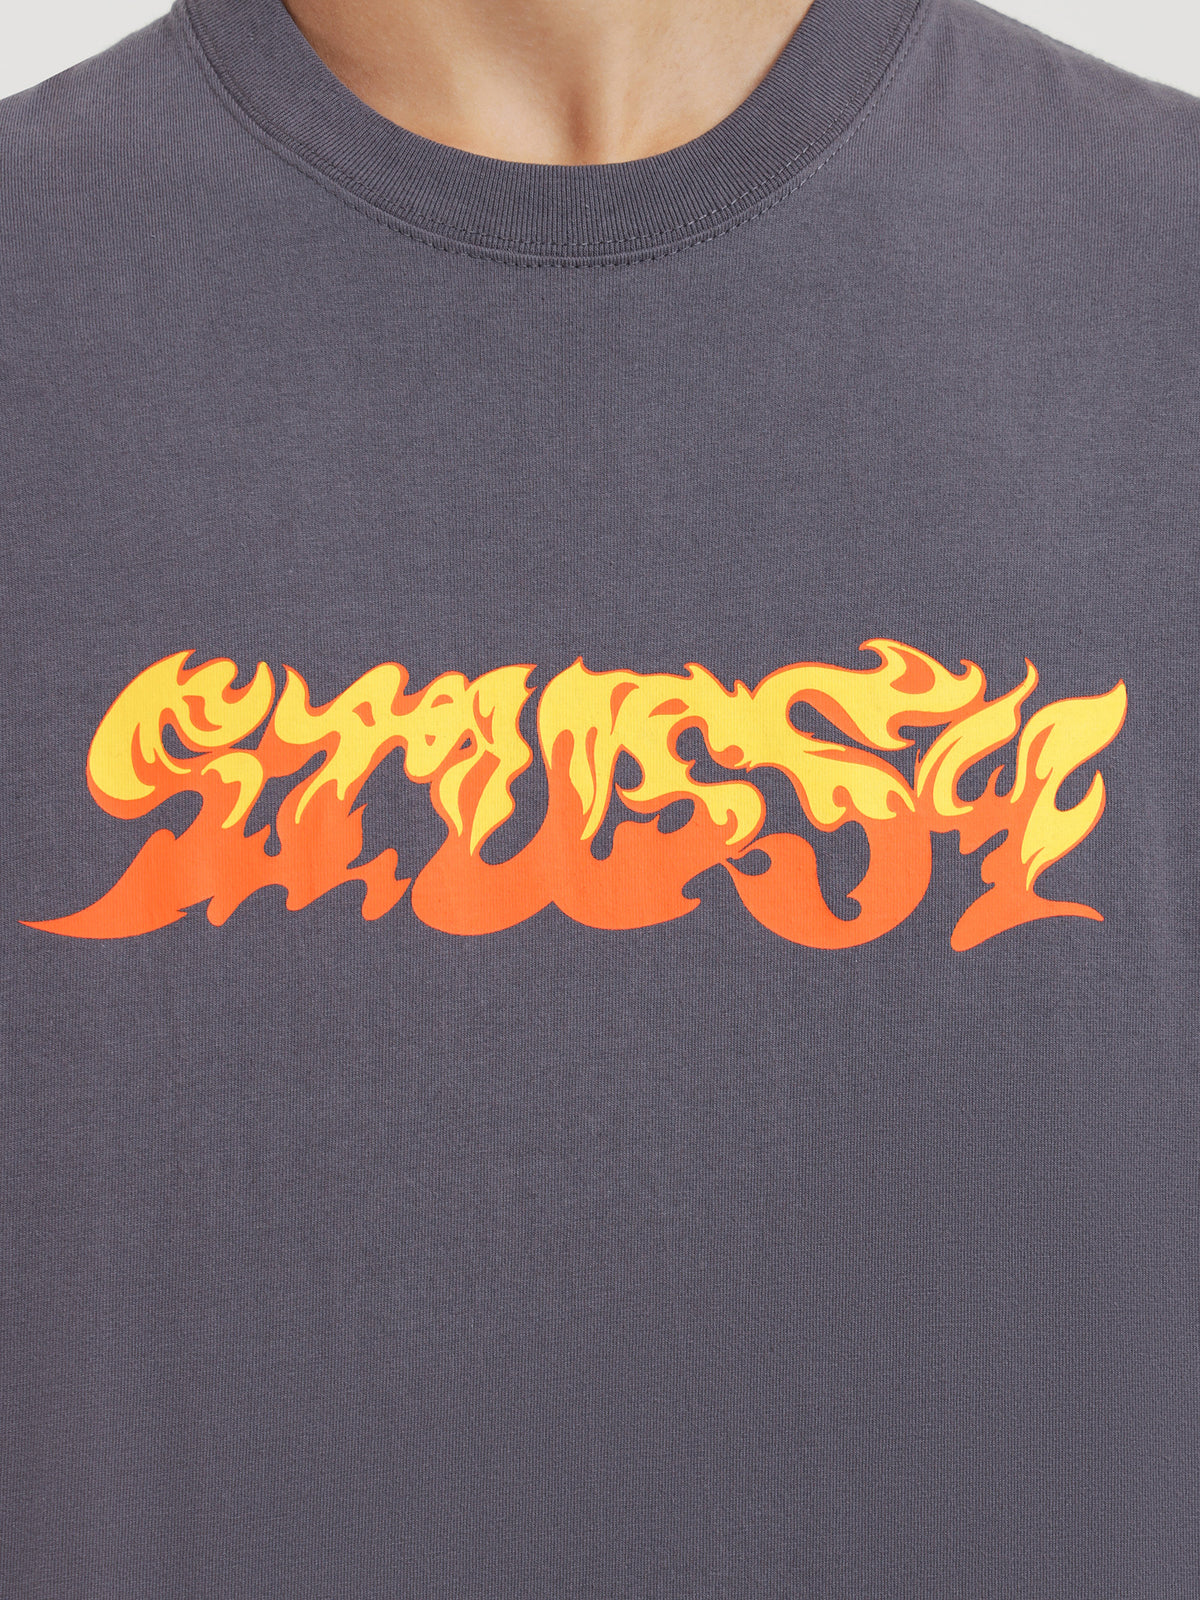 Flames Heavyweight T-Shirt in Charcoal